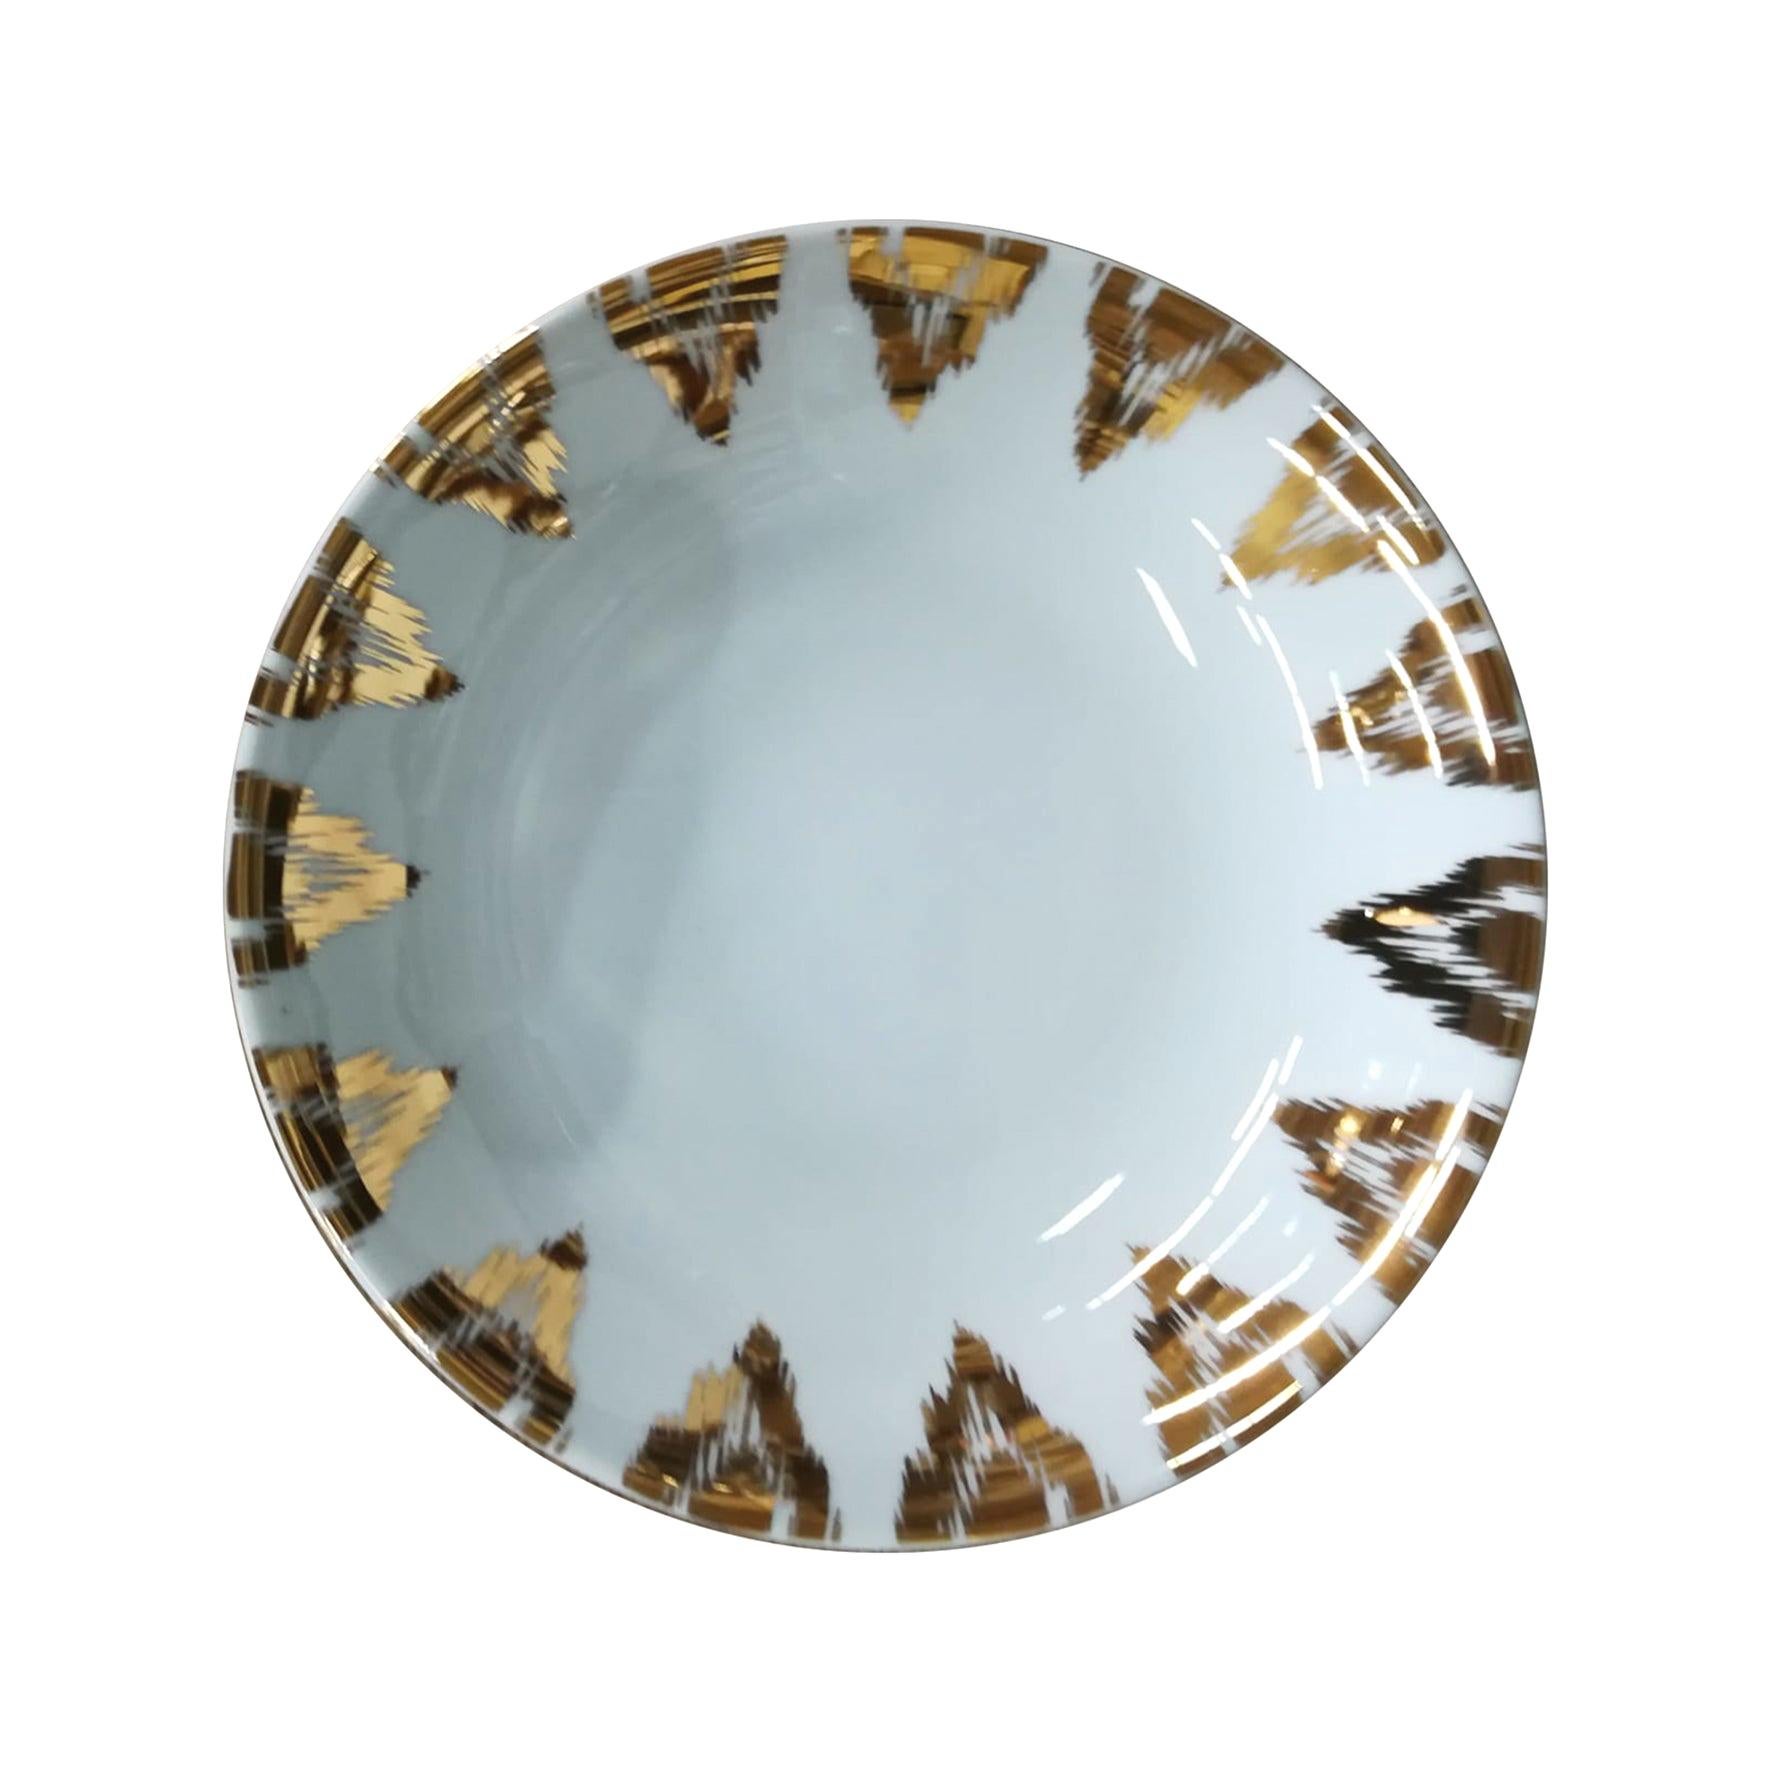 Uzbek Gold Porcelain Dessert Plate